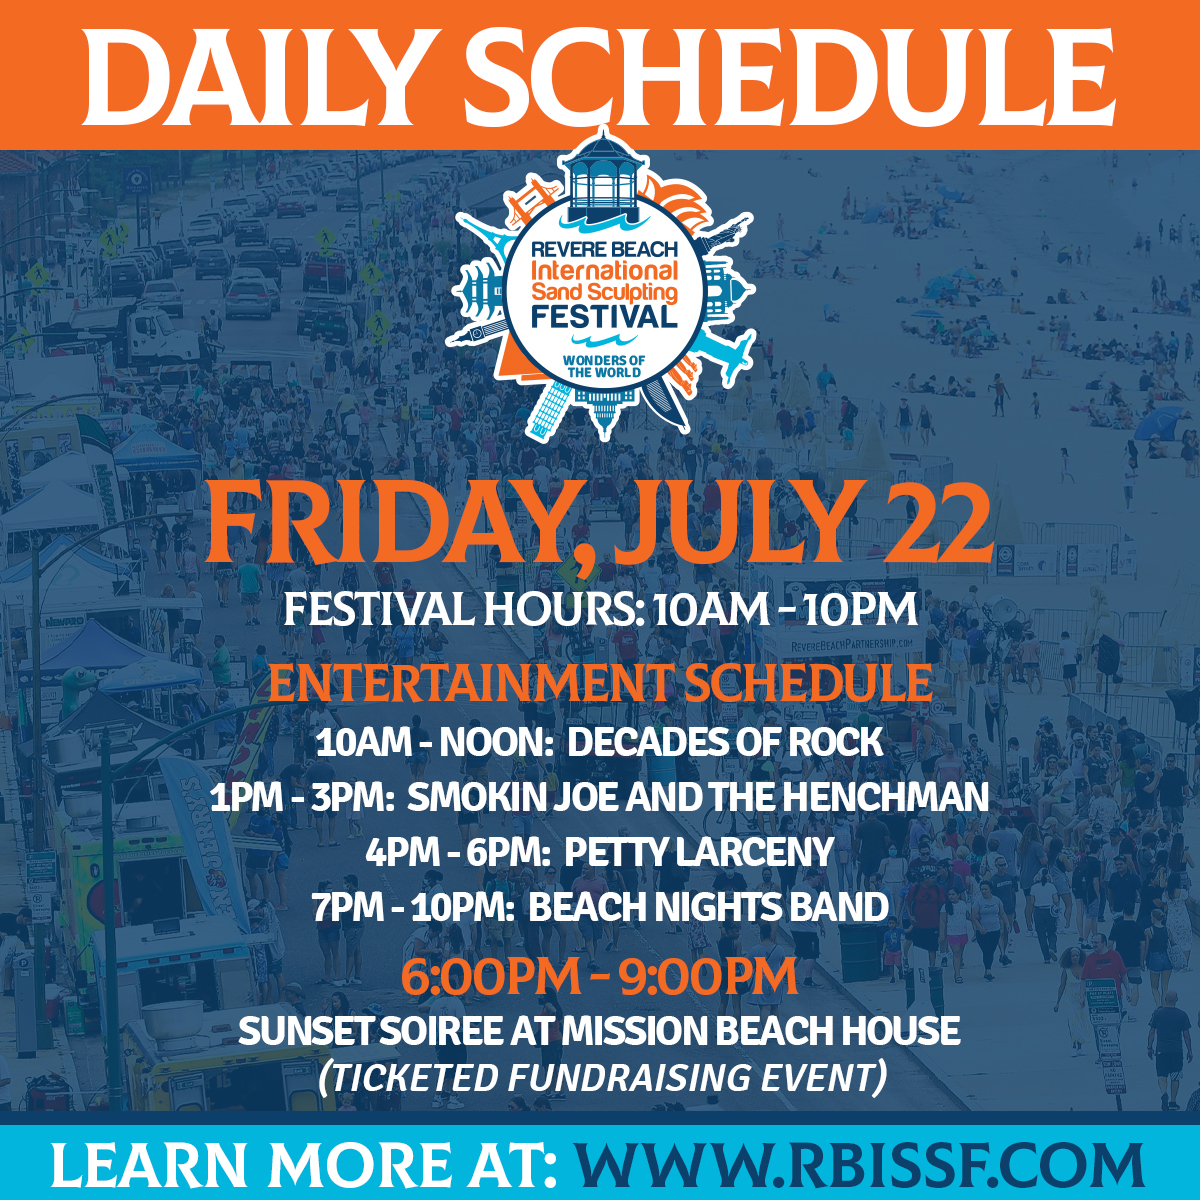 Schedule / Entertainment Revere Beach